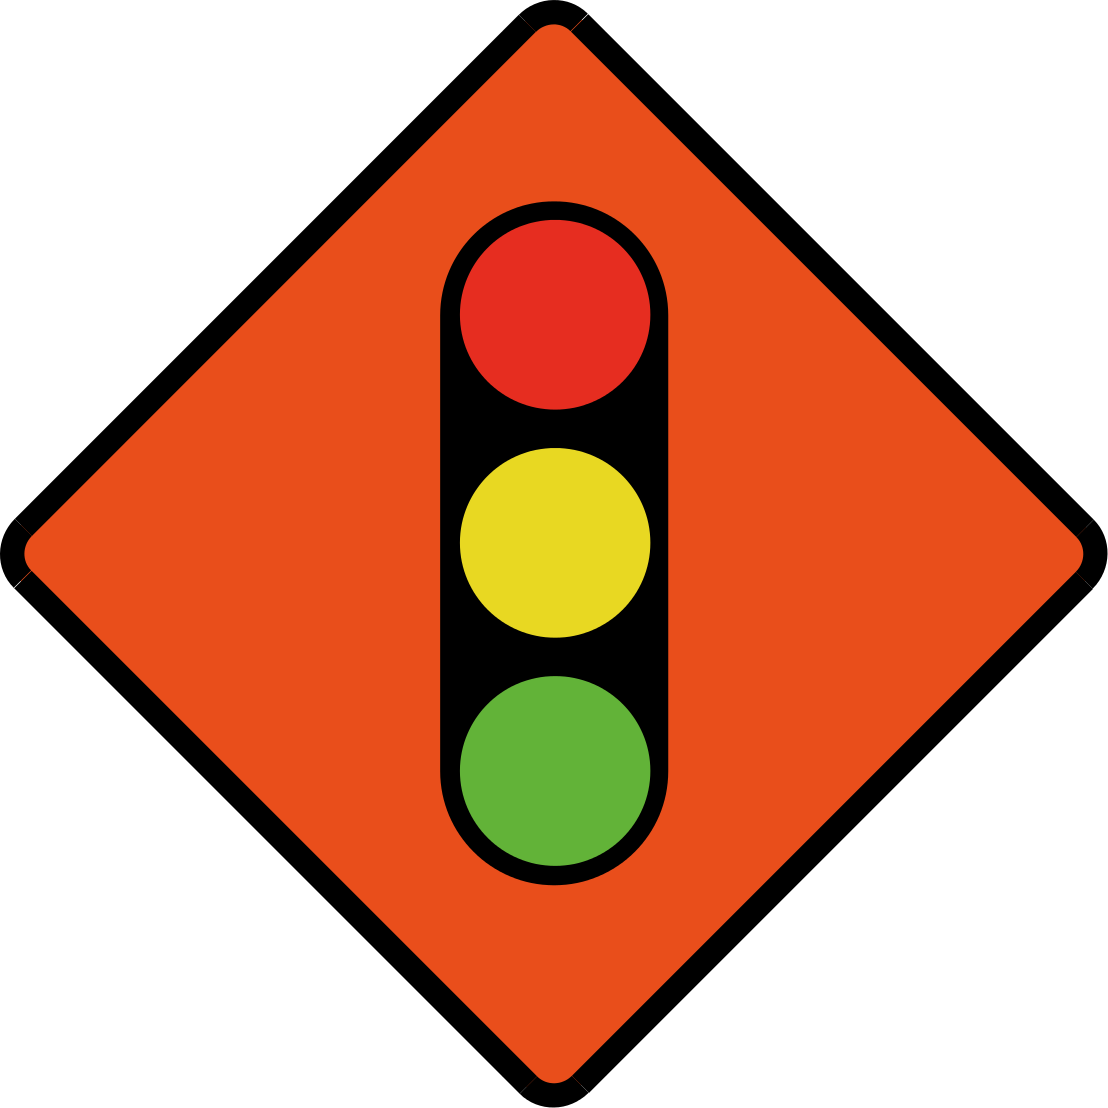 Traffic lights in use ahead